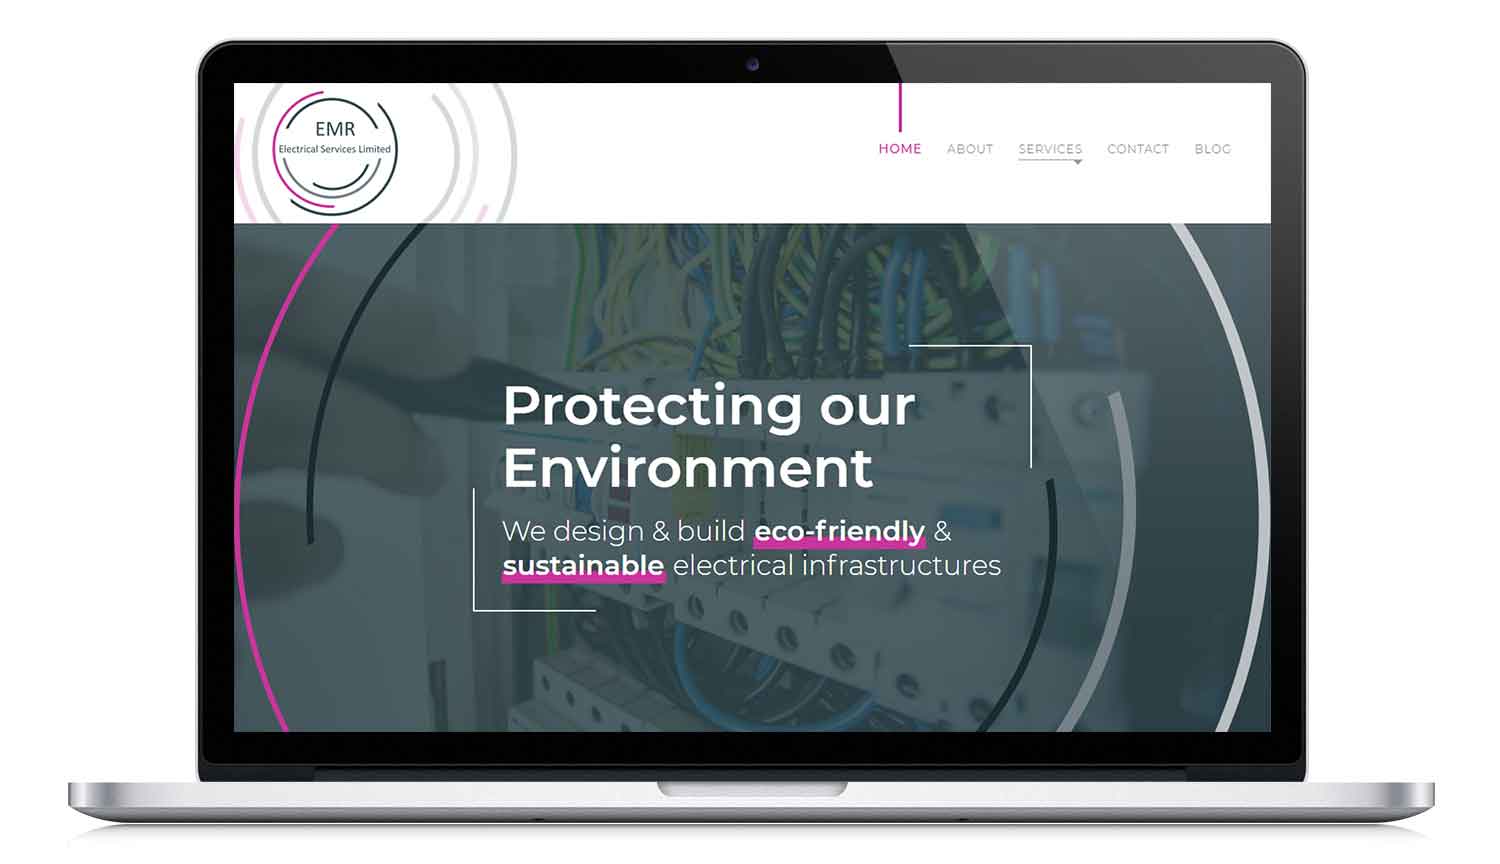 EMR Electrical Services: Fully responsive web design